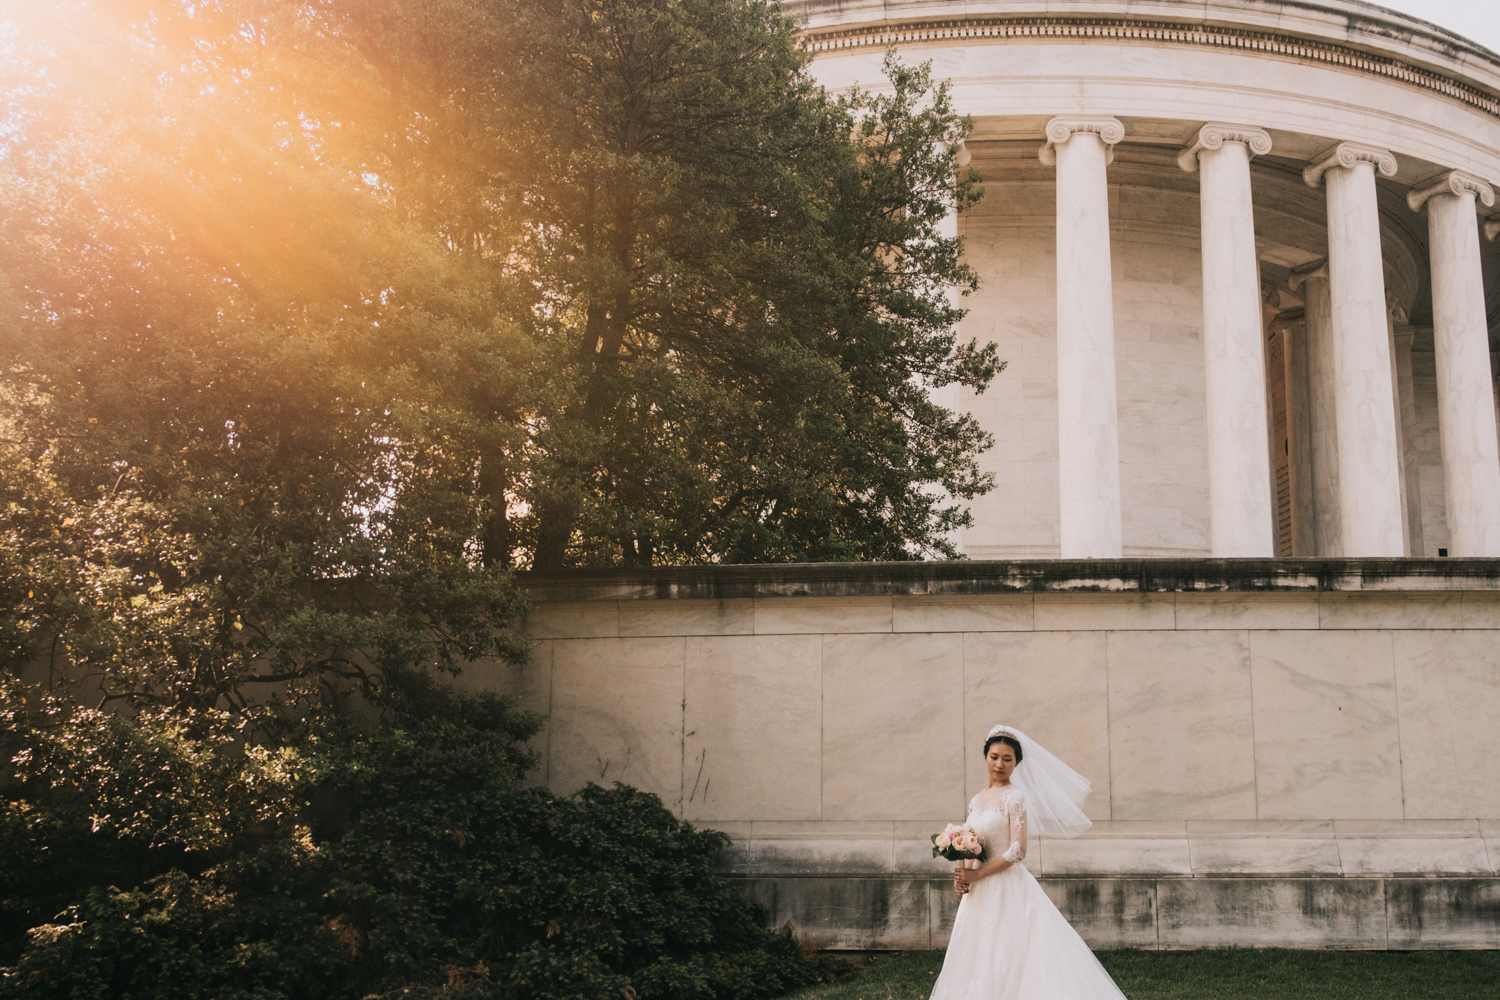 Epic bridal portrait at the Jefferson Memorial in Washington DC wedding